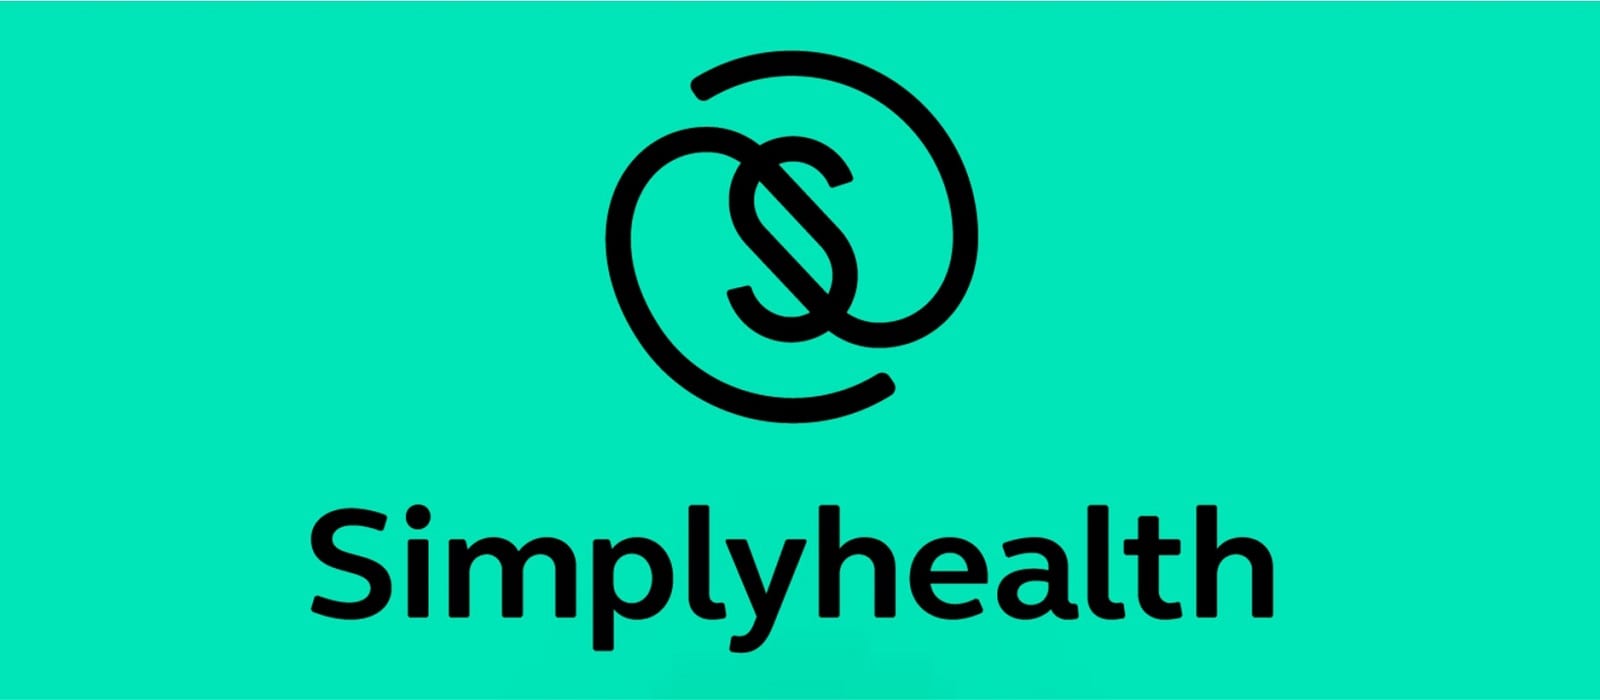 simplyhealth-logo